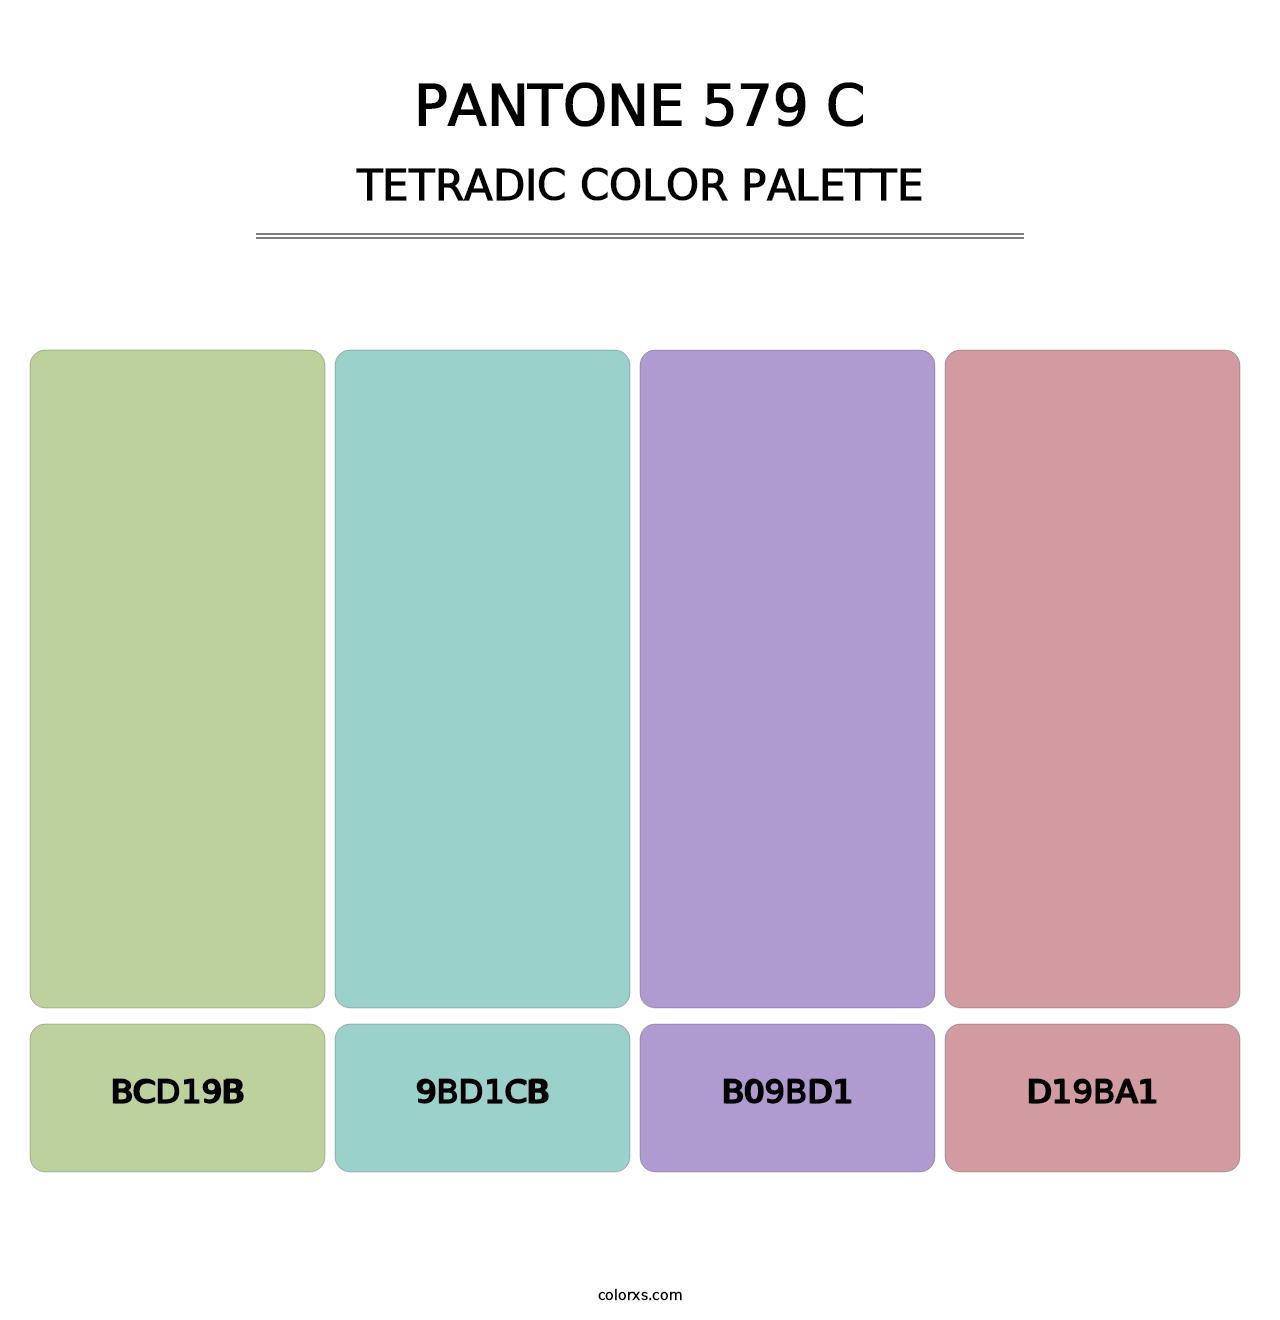 PANTONE 579 C - Tetradic Color Palette